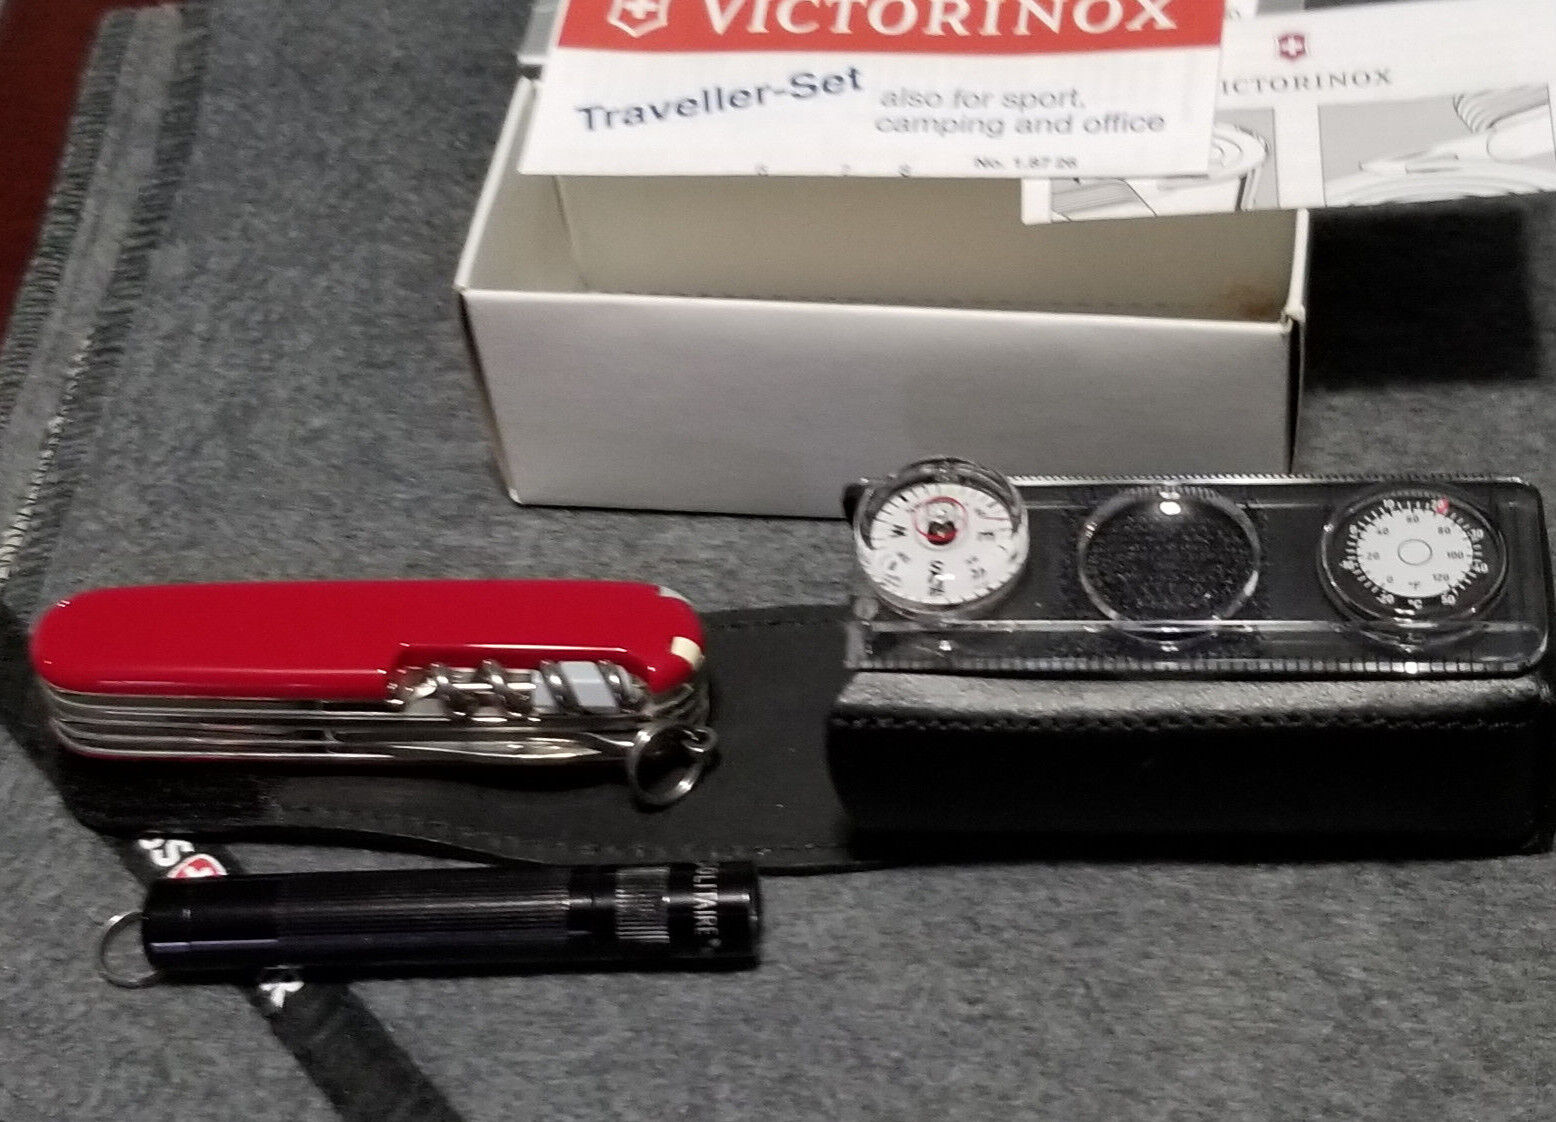 Victorinox rare Traveller set Huntsman+ Leather pouch, multi-tool and light 